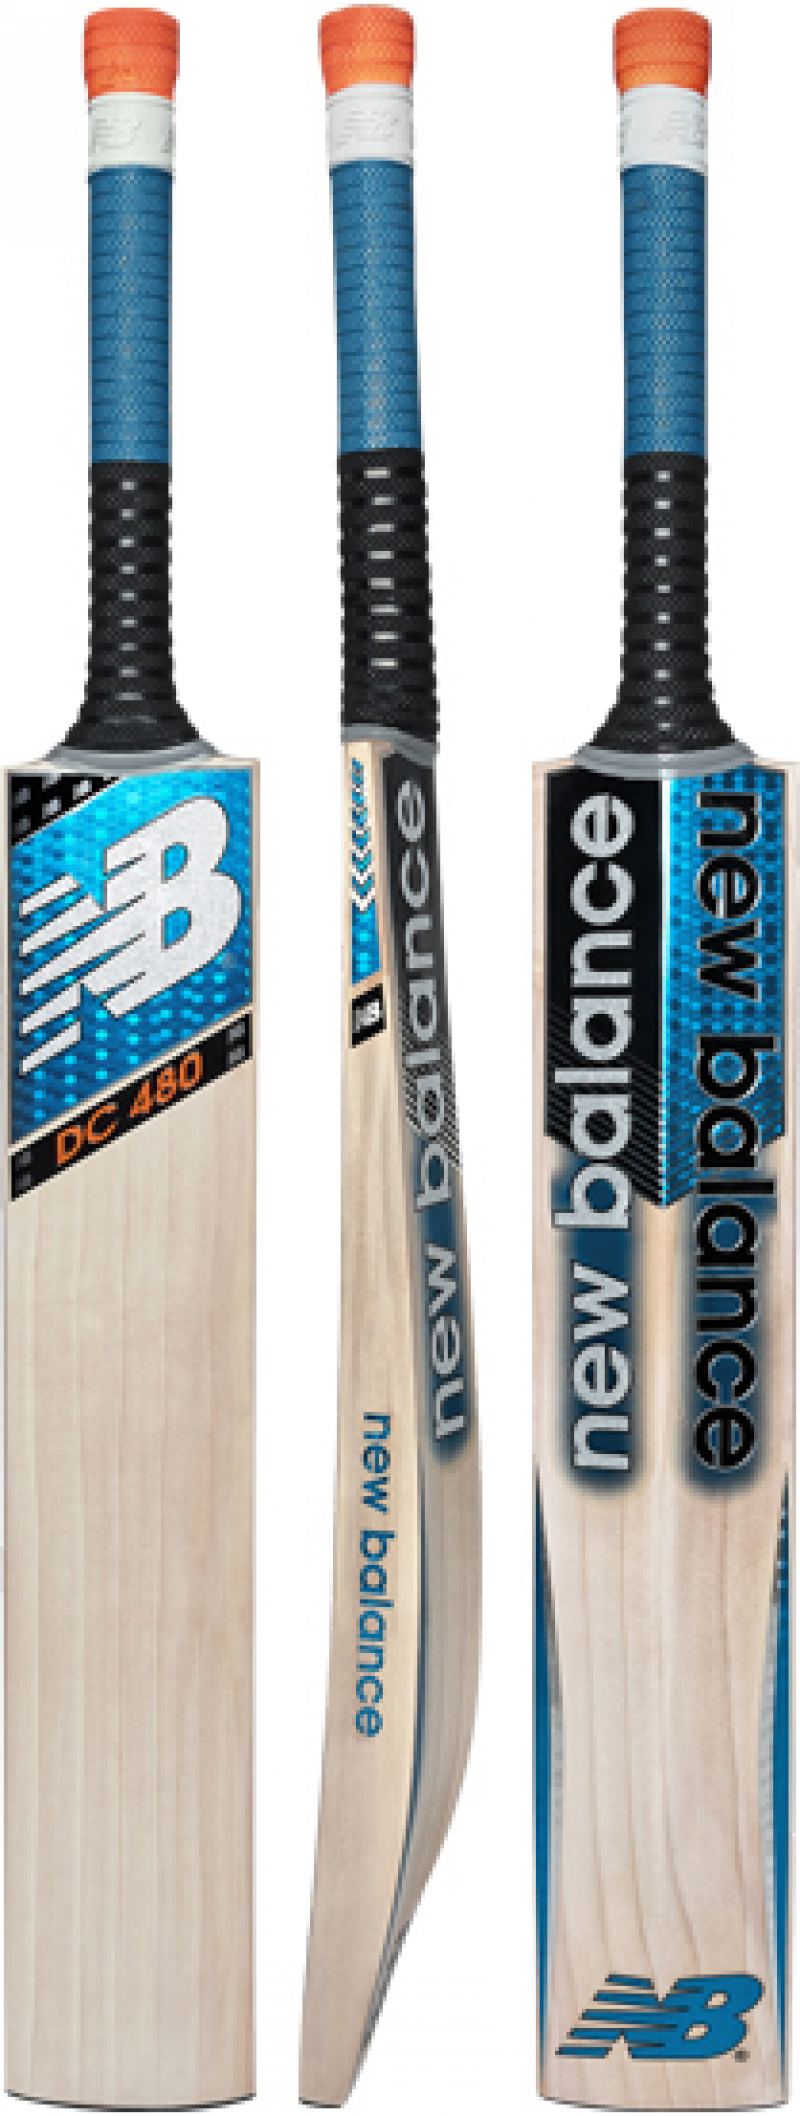 new balance cricket bats junior